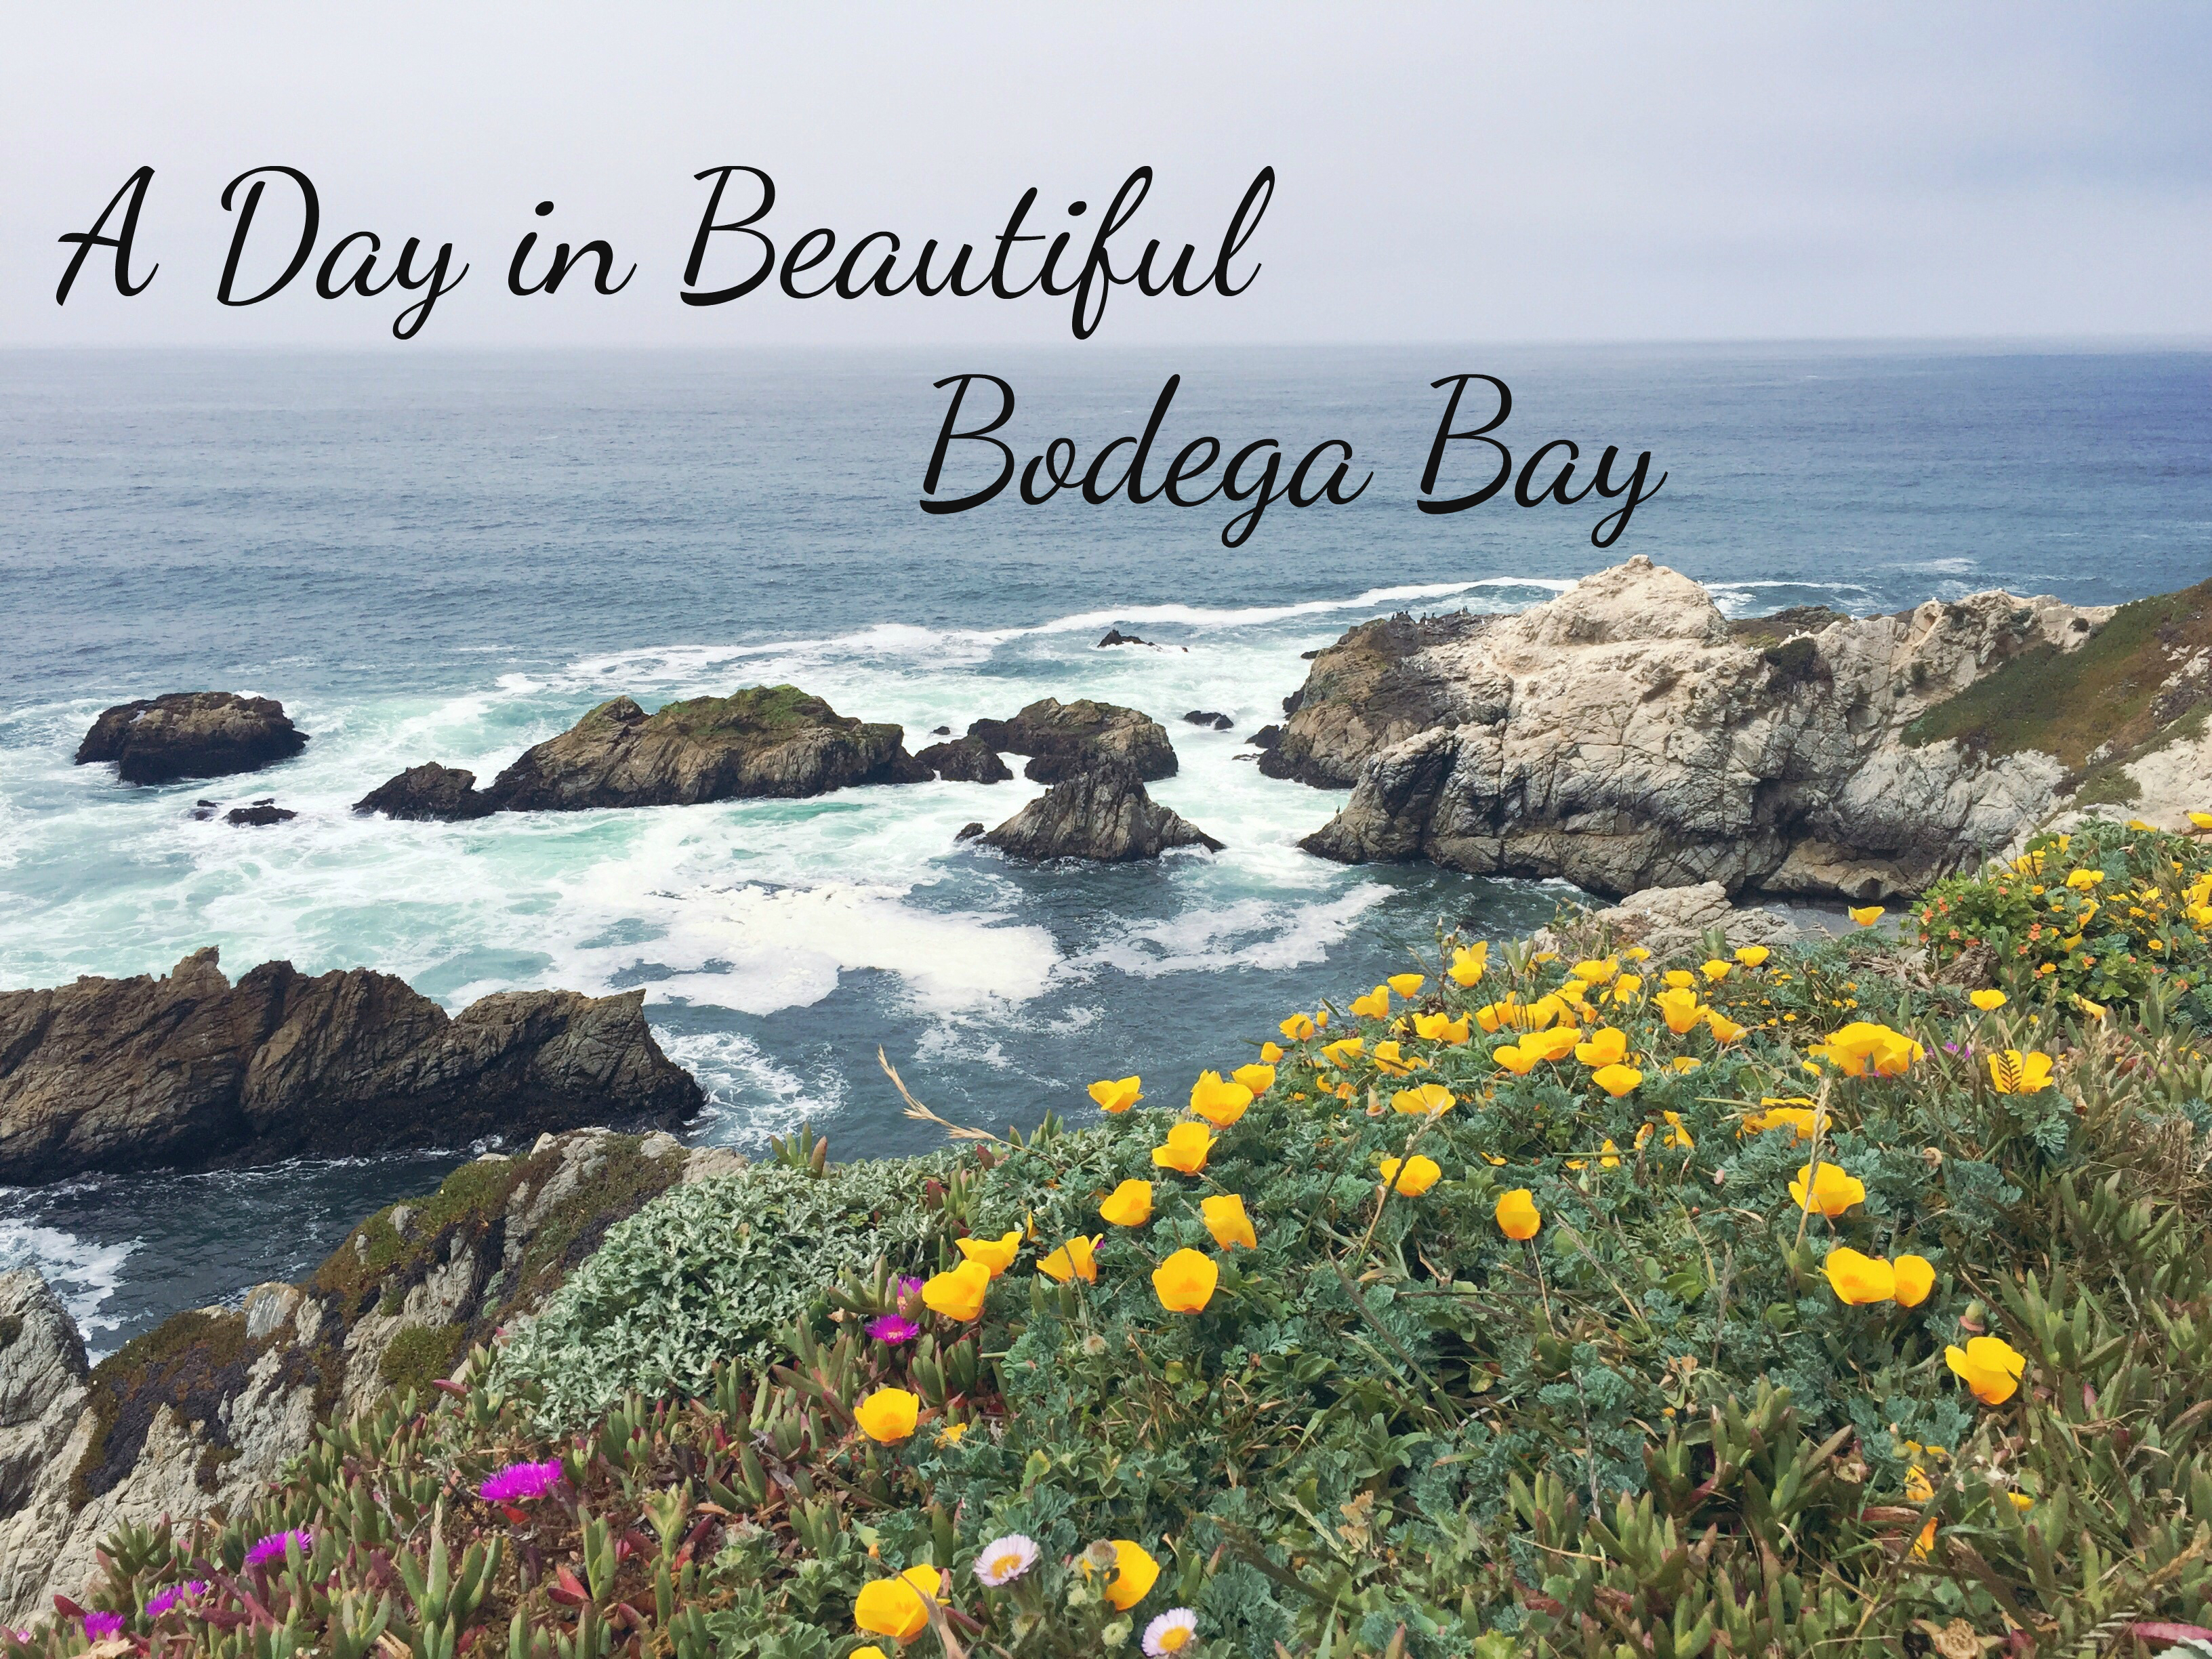 bodega bay pics, california coast pics